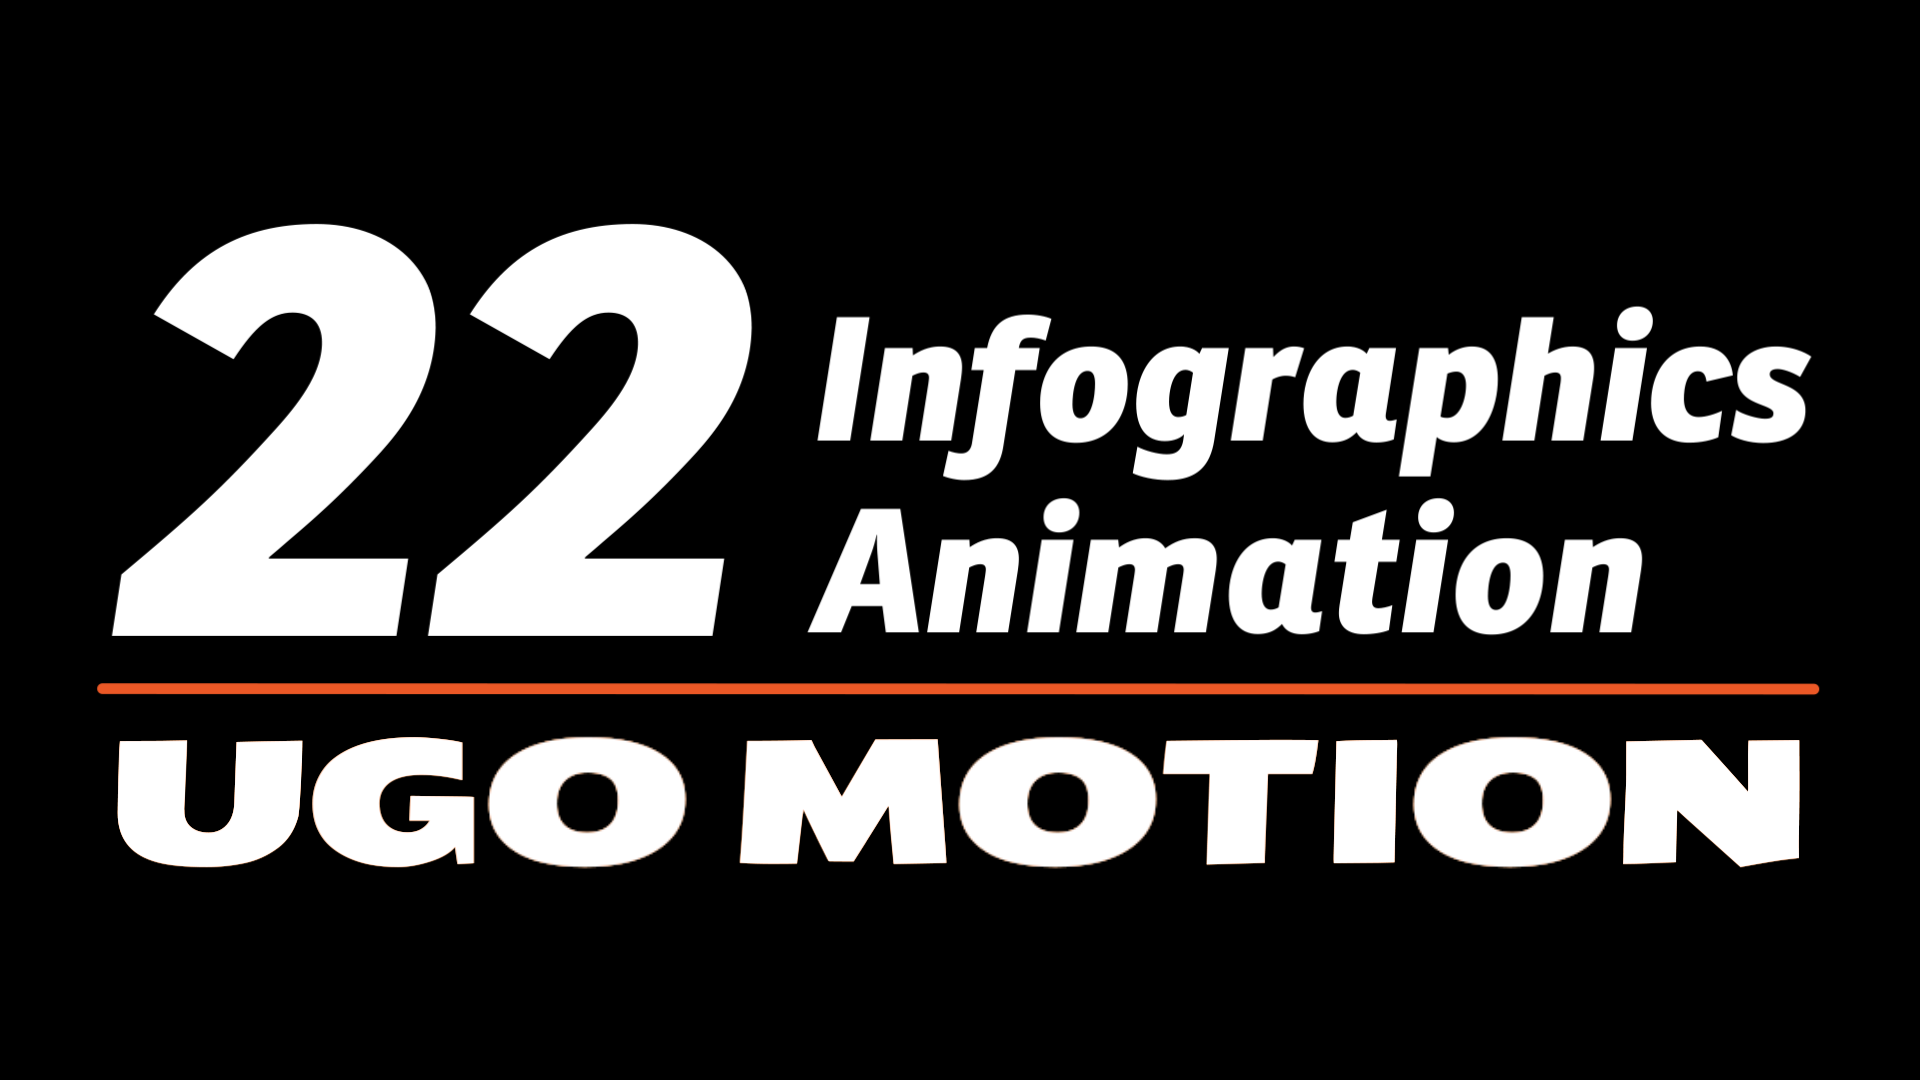 22 Infographics Animationのデザイン & レイアウト画像23